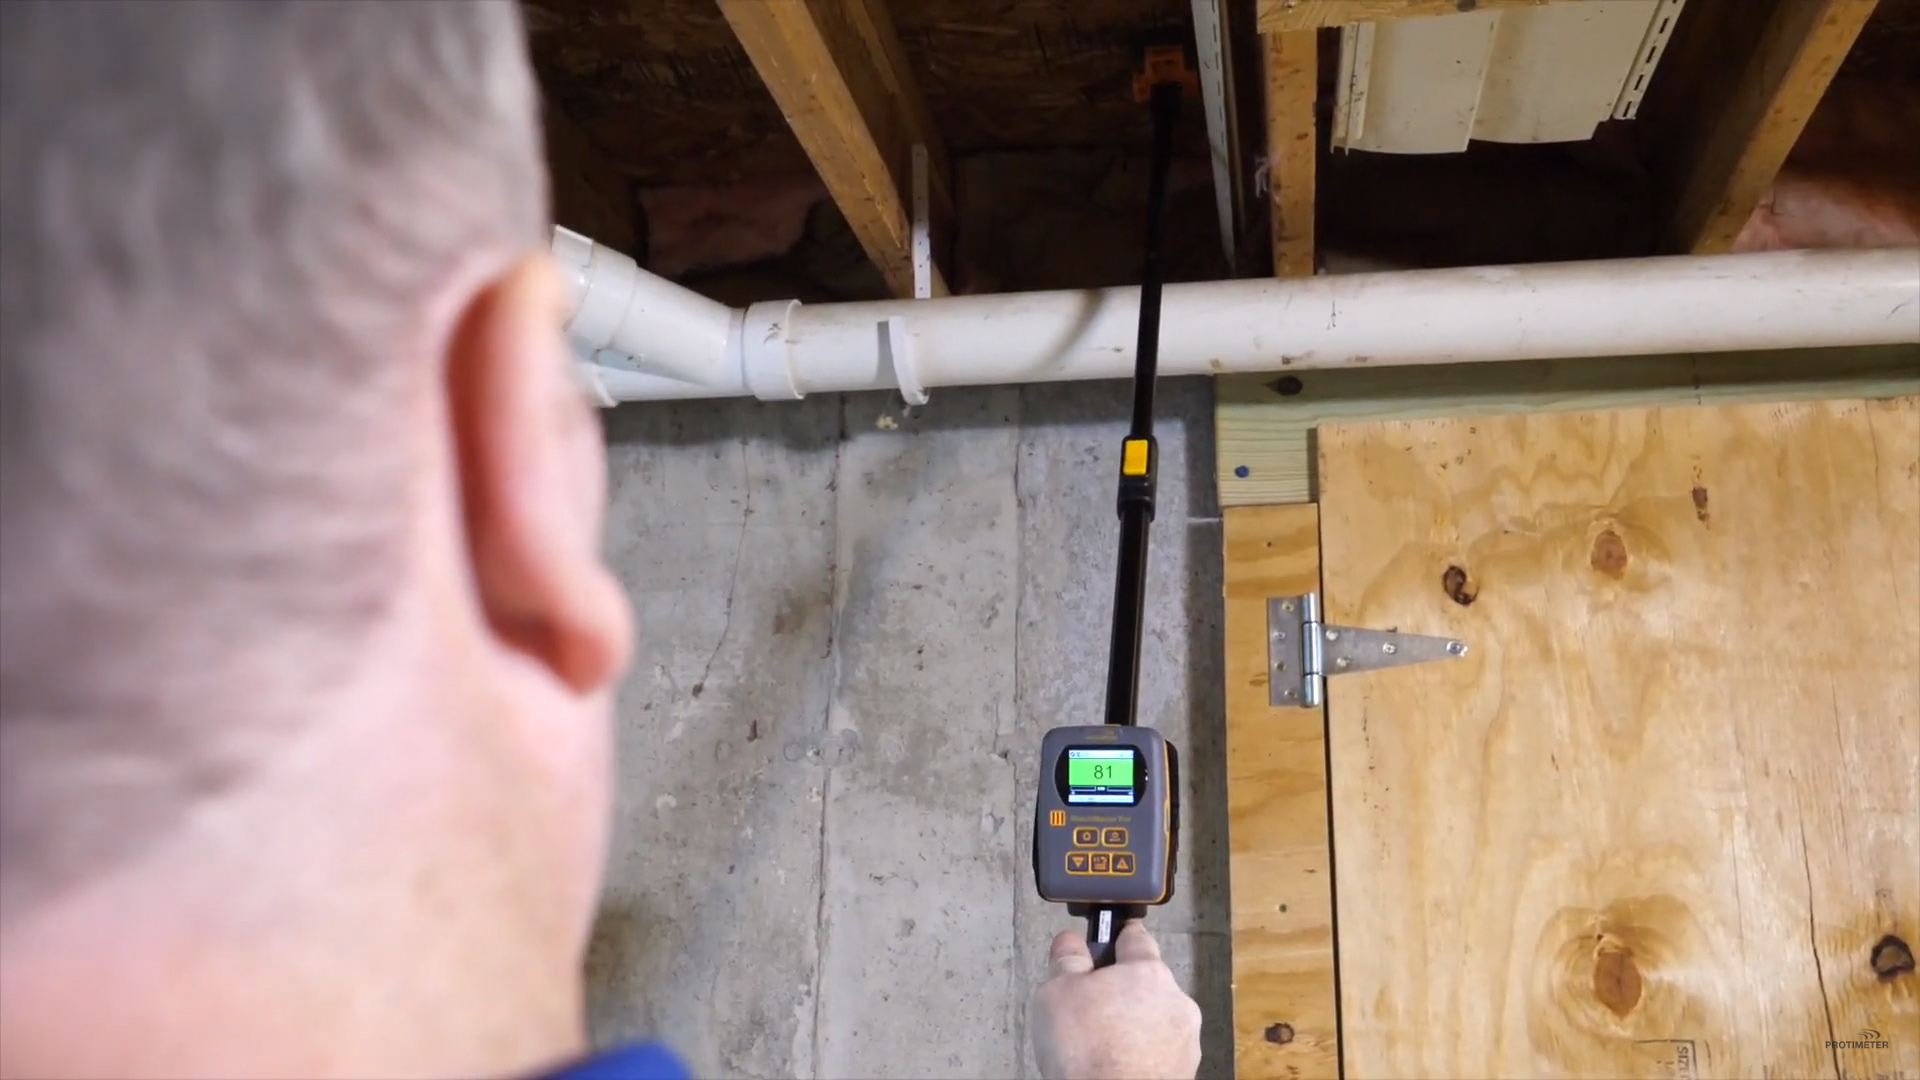 Protimeter ReachMaster Pro Moisture Meter measuring the level of moistre in a ceiling.